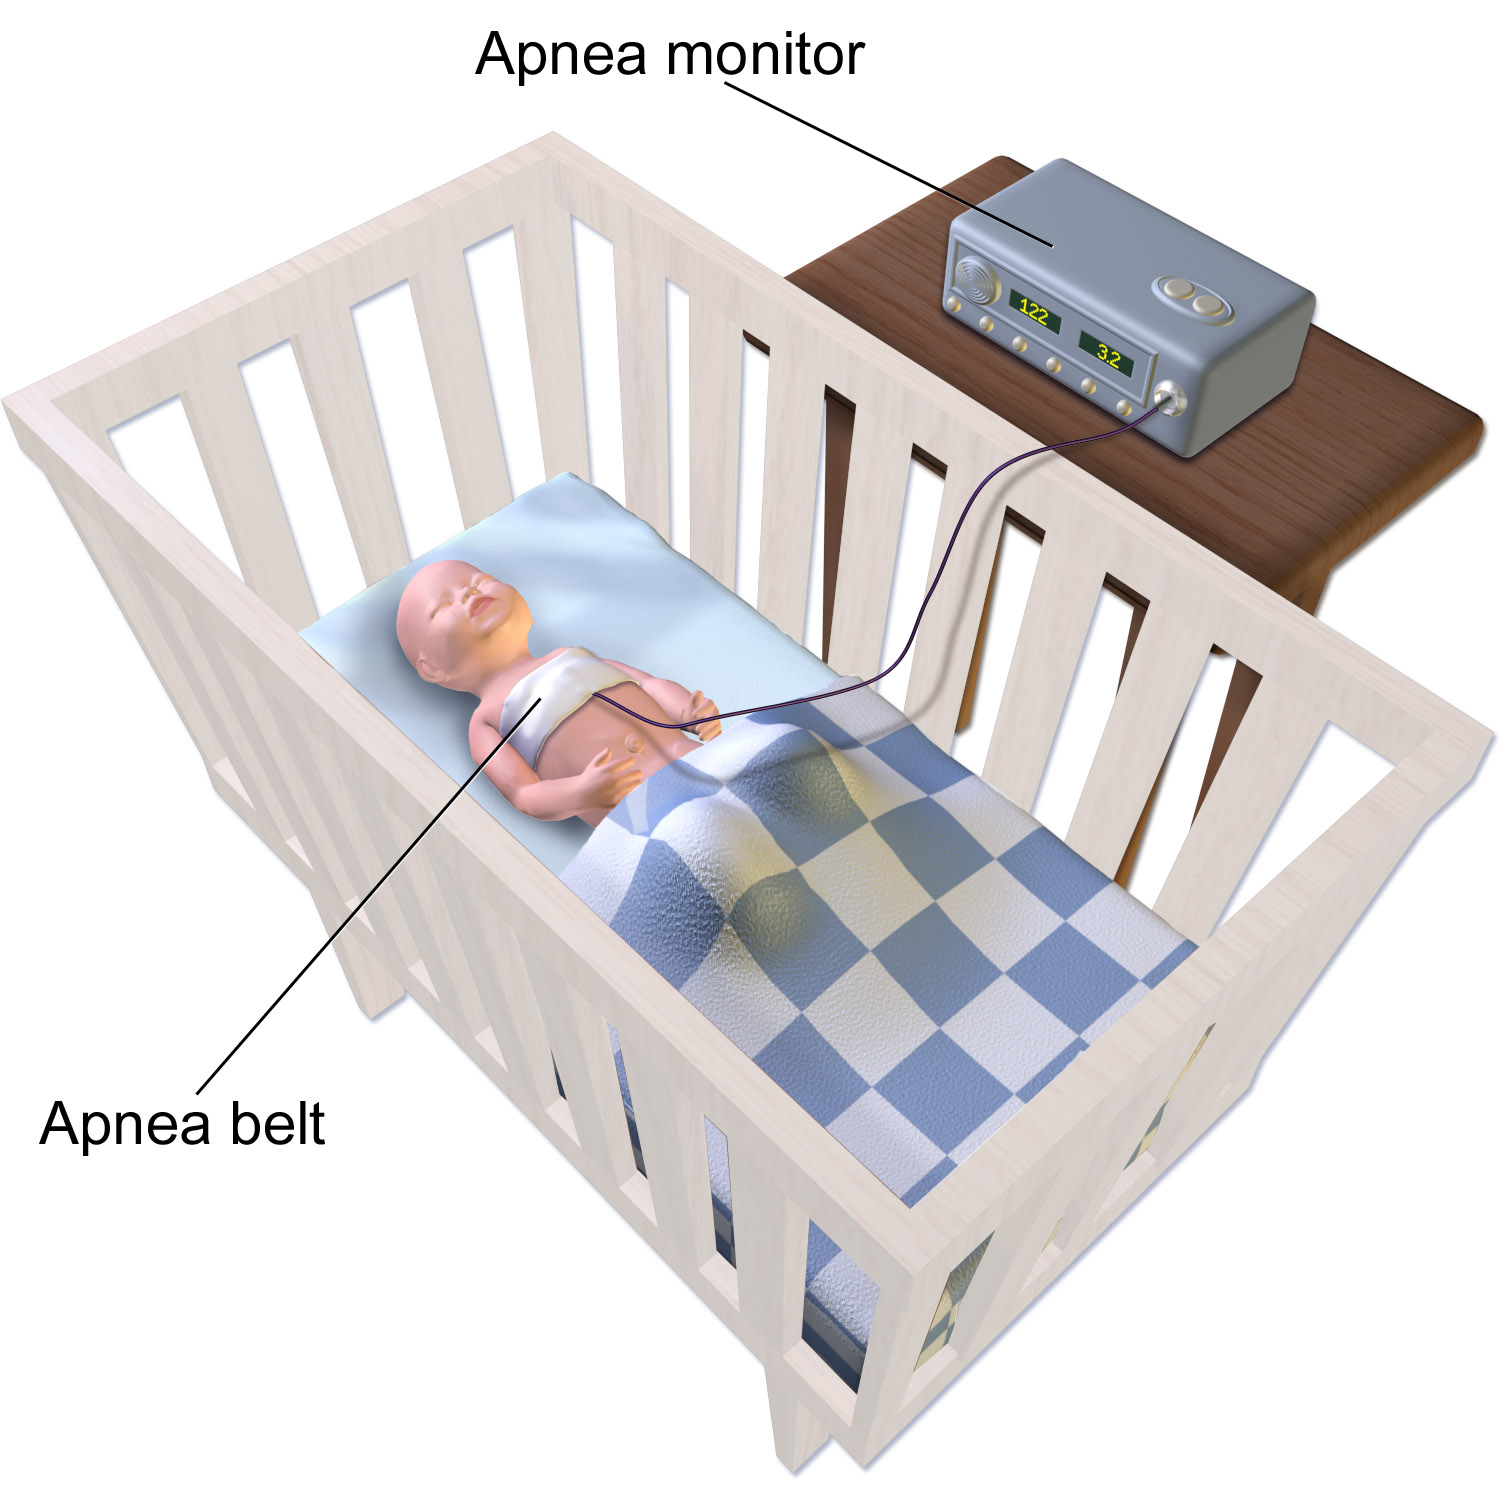 Sleep Apnea | What Are Its Causes And Symptoms?